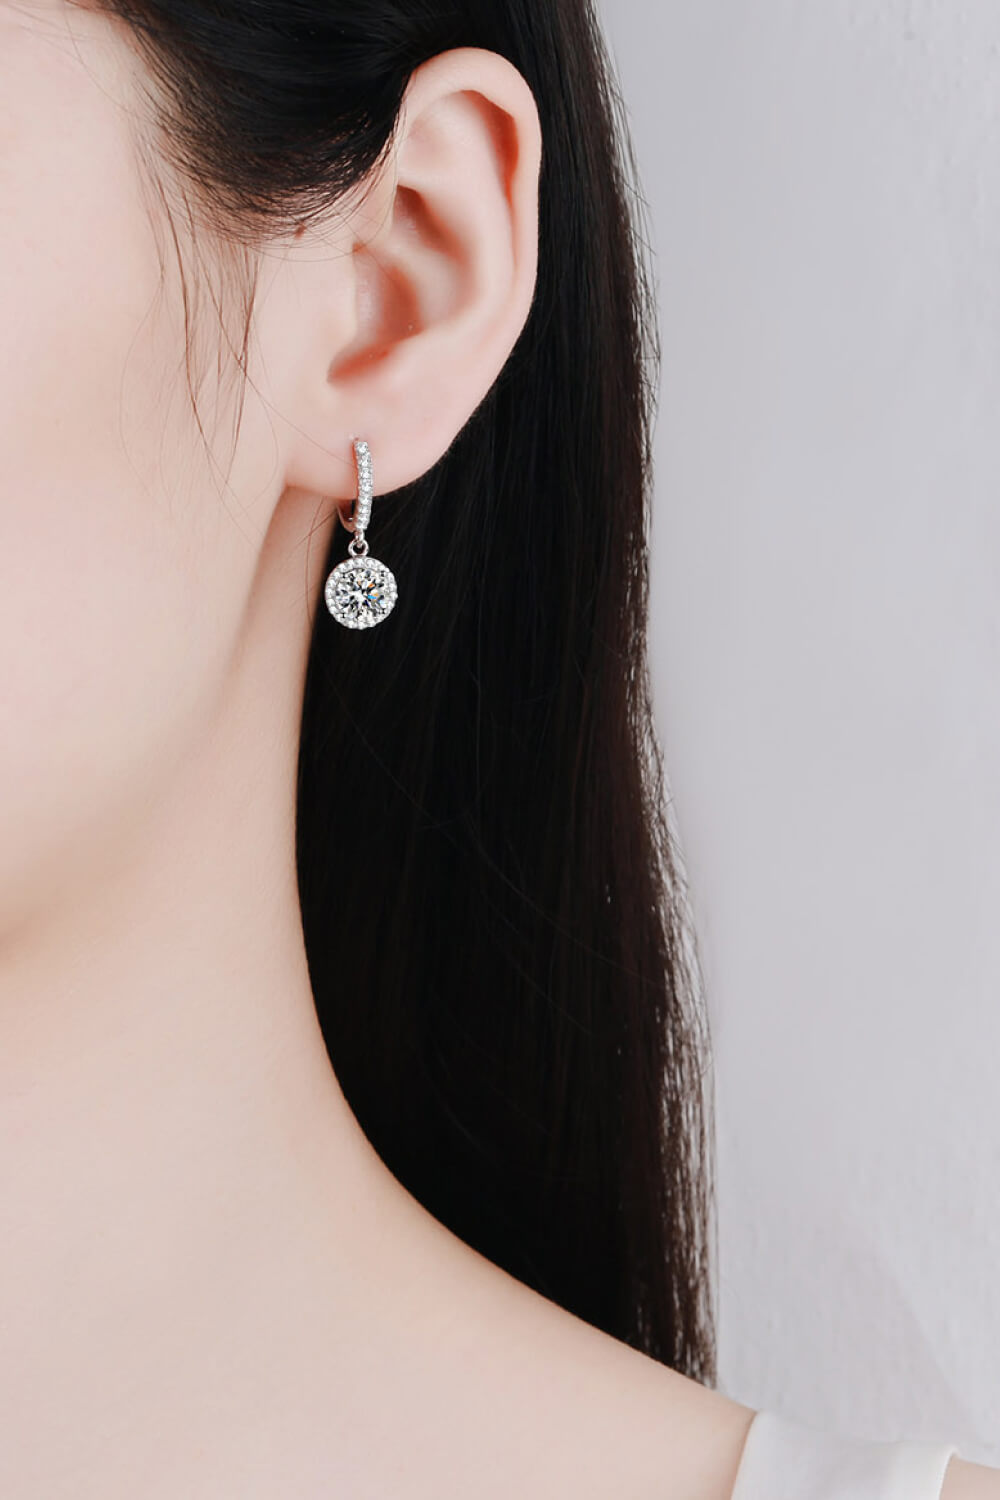 2 Carat Moissanite Round-Shaped Drop Earrings - Sharon David's